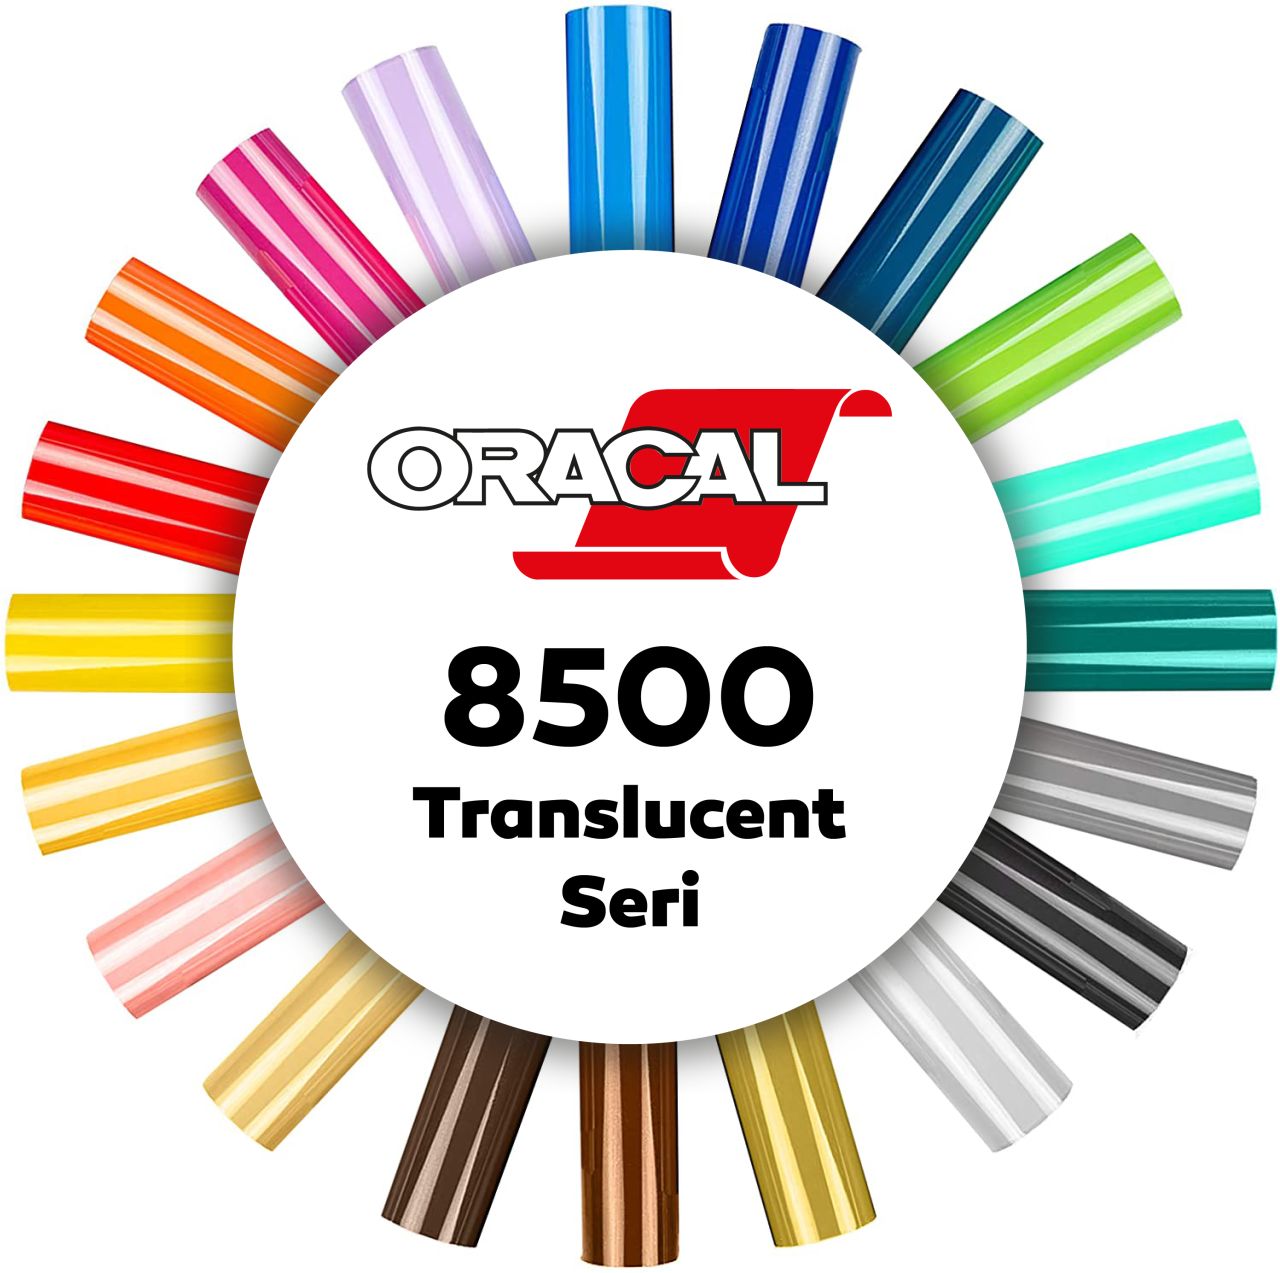 Oracal 8500 Translucent Serisi